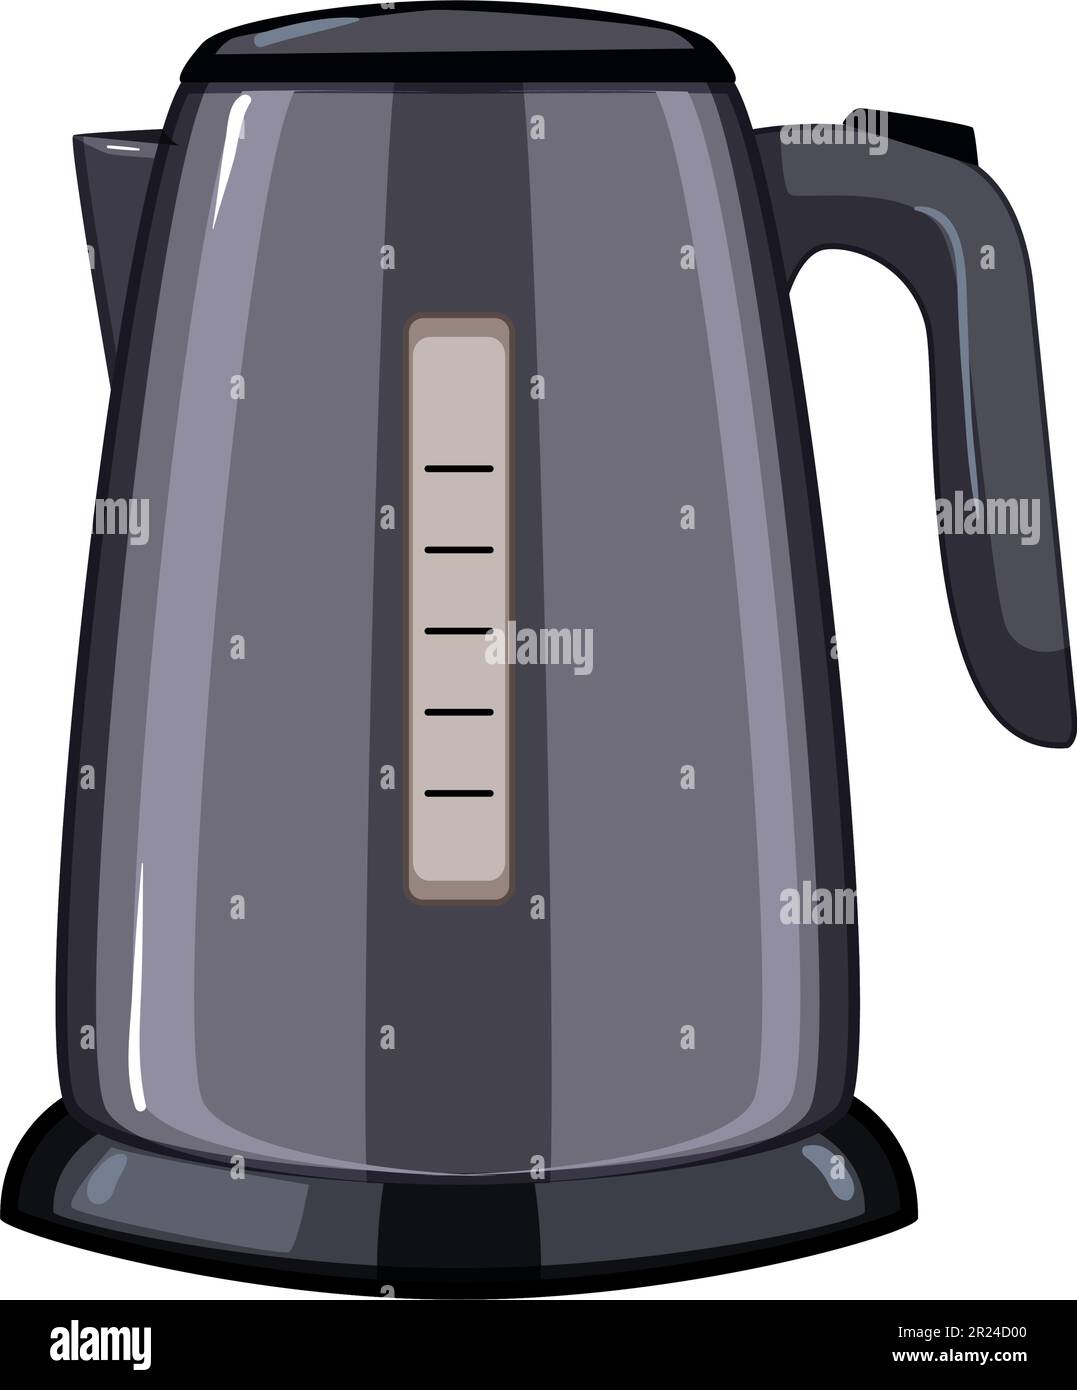 tea electric kettle cartoon vector illustration Stock Vector